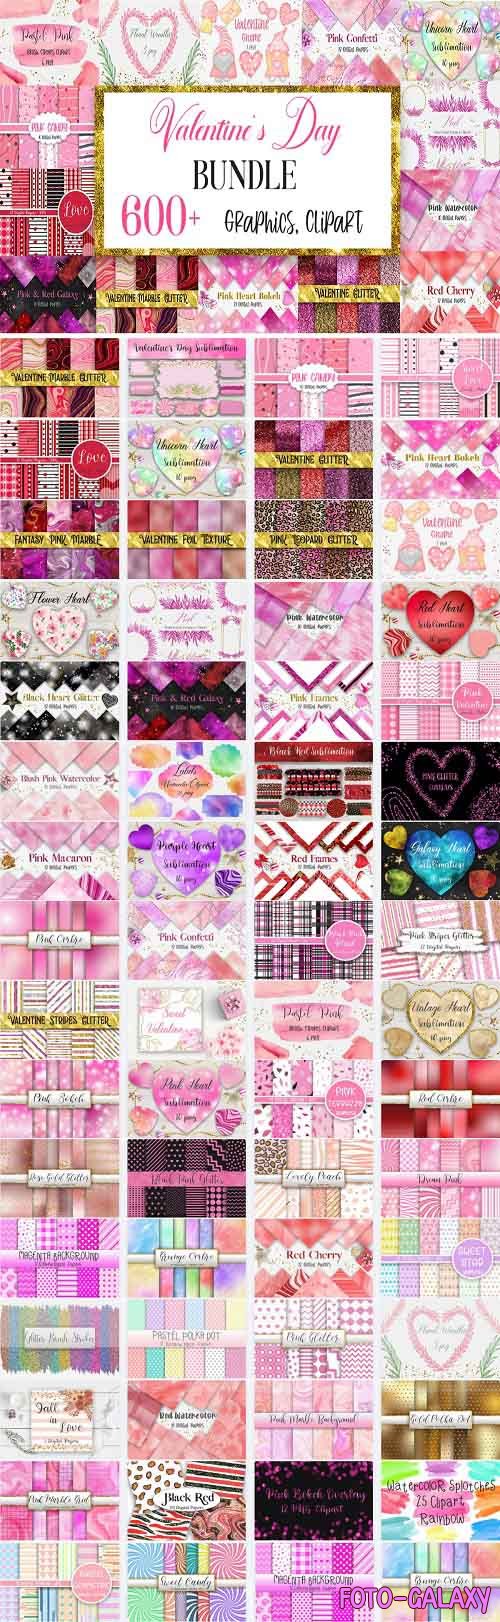 Valentines Day Graphics Bundle - 62 Premium Graphics